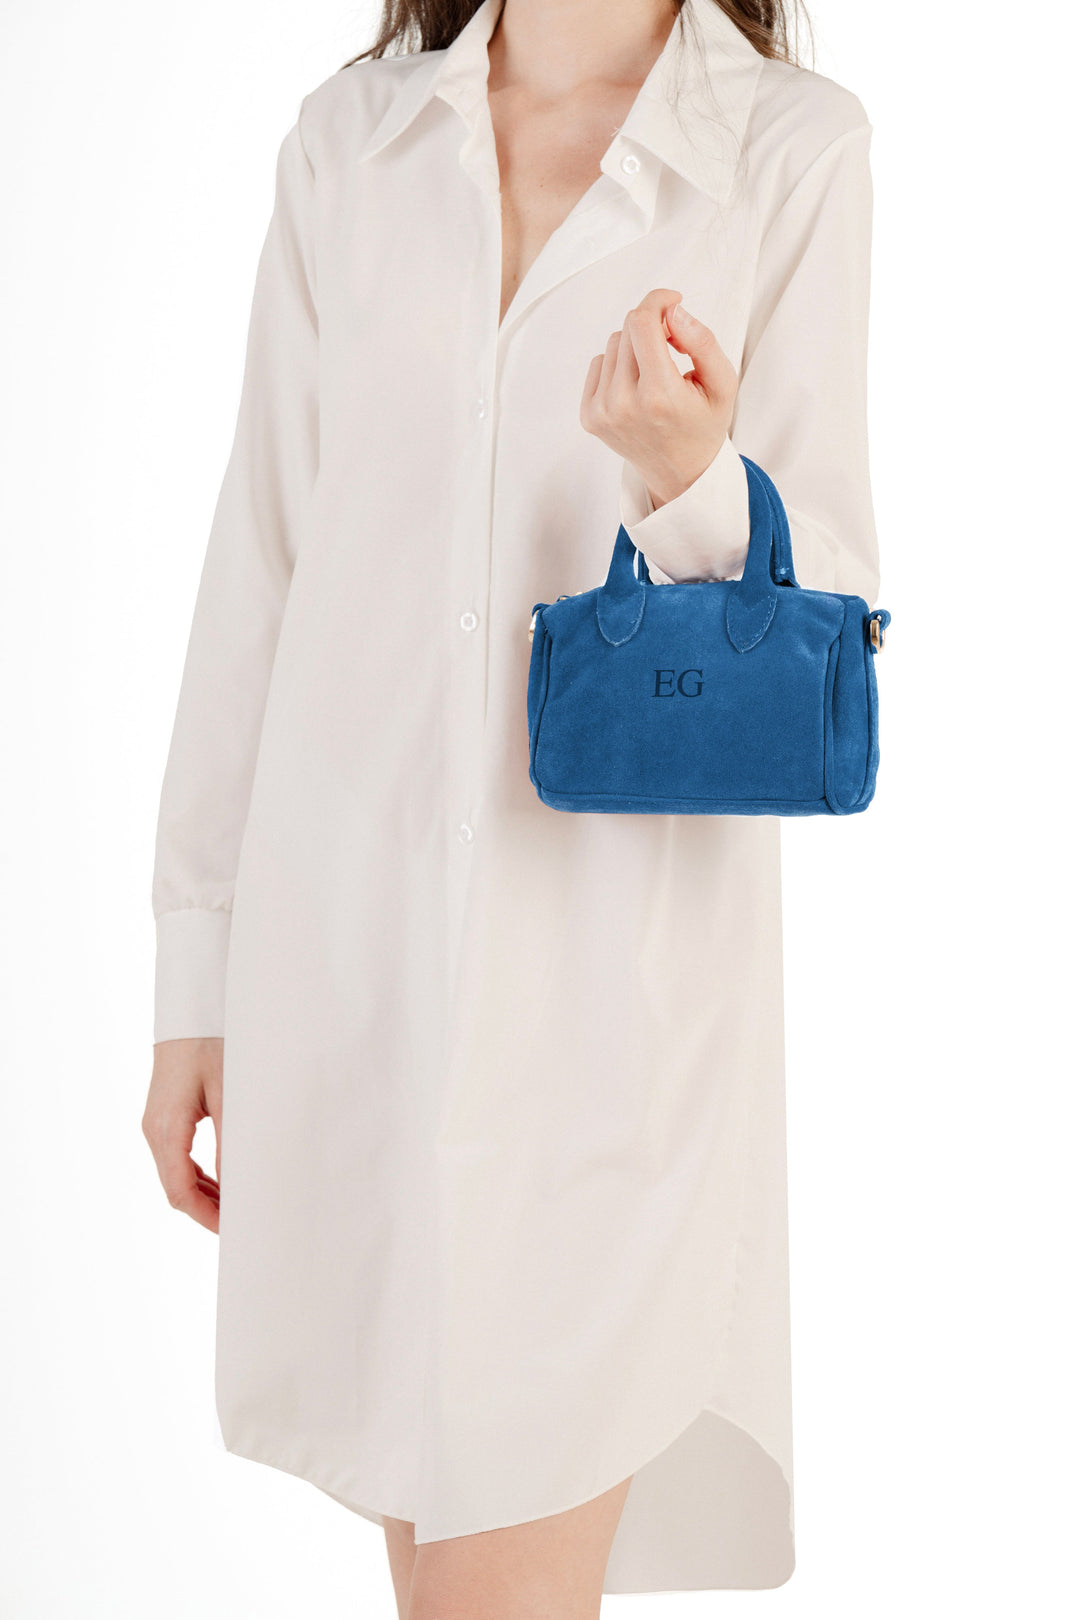 Woman in white dress holding a blue handbag